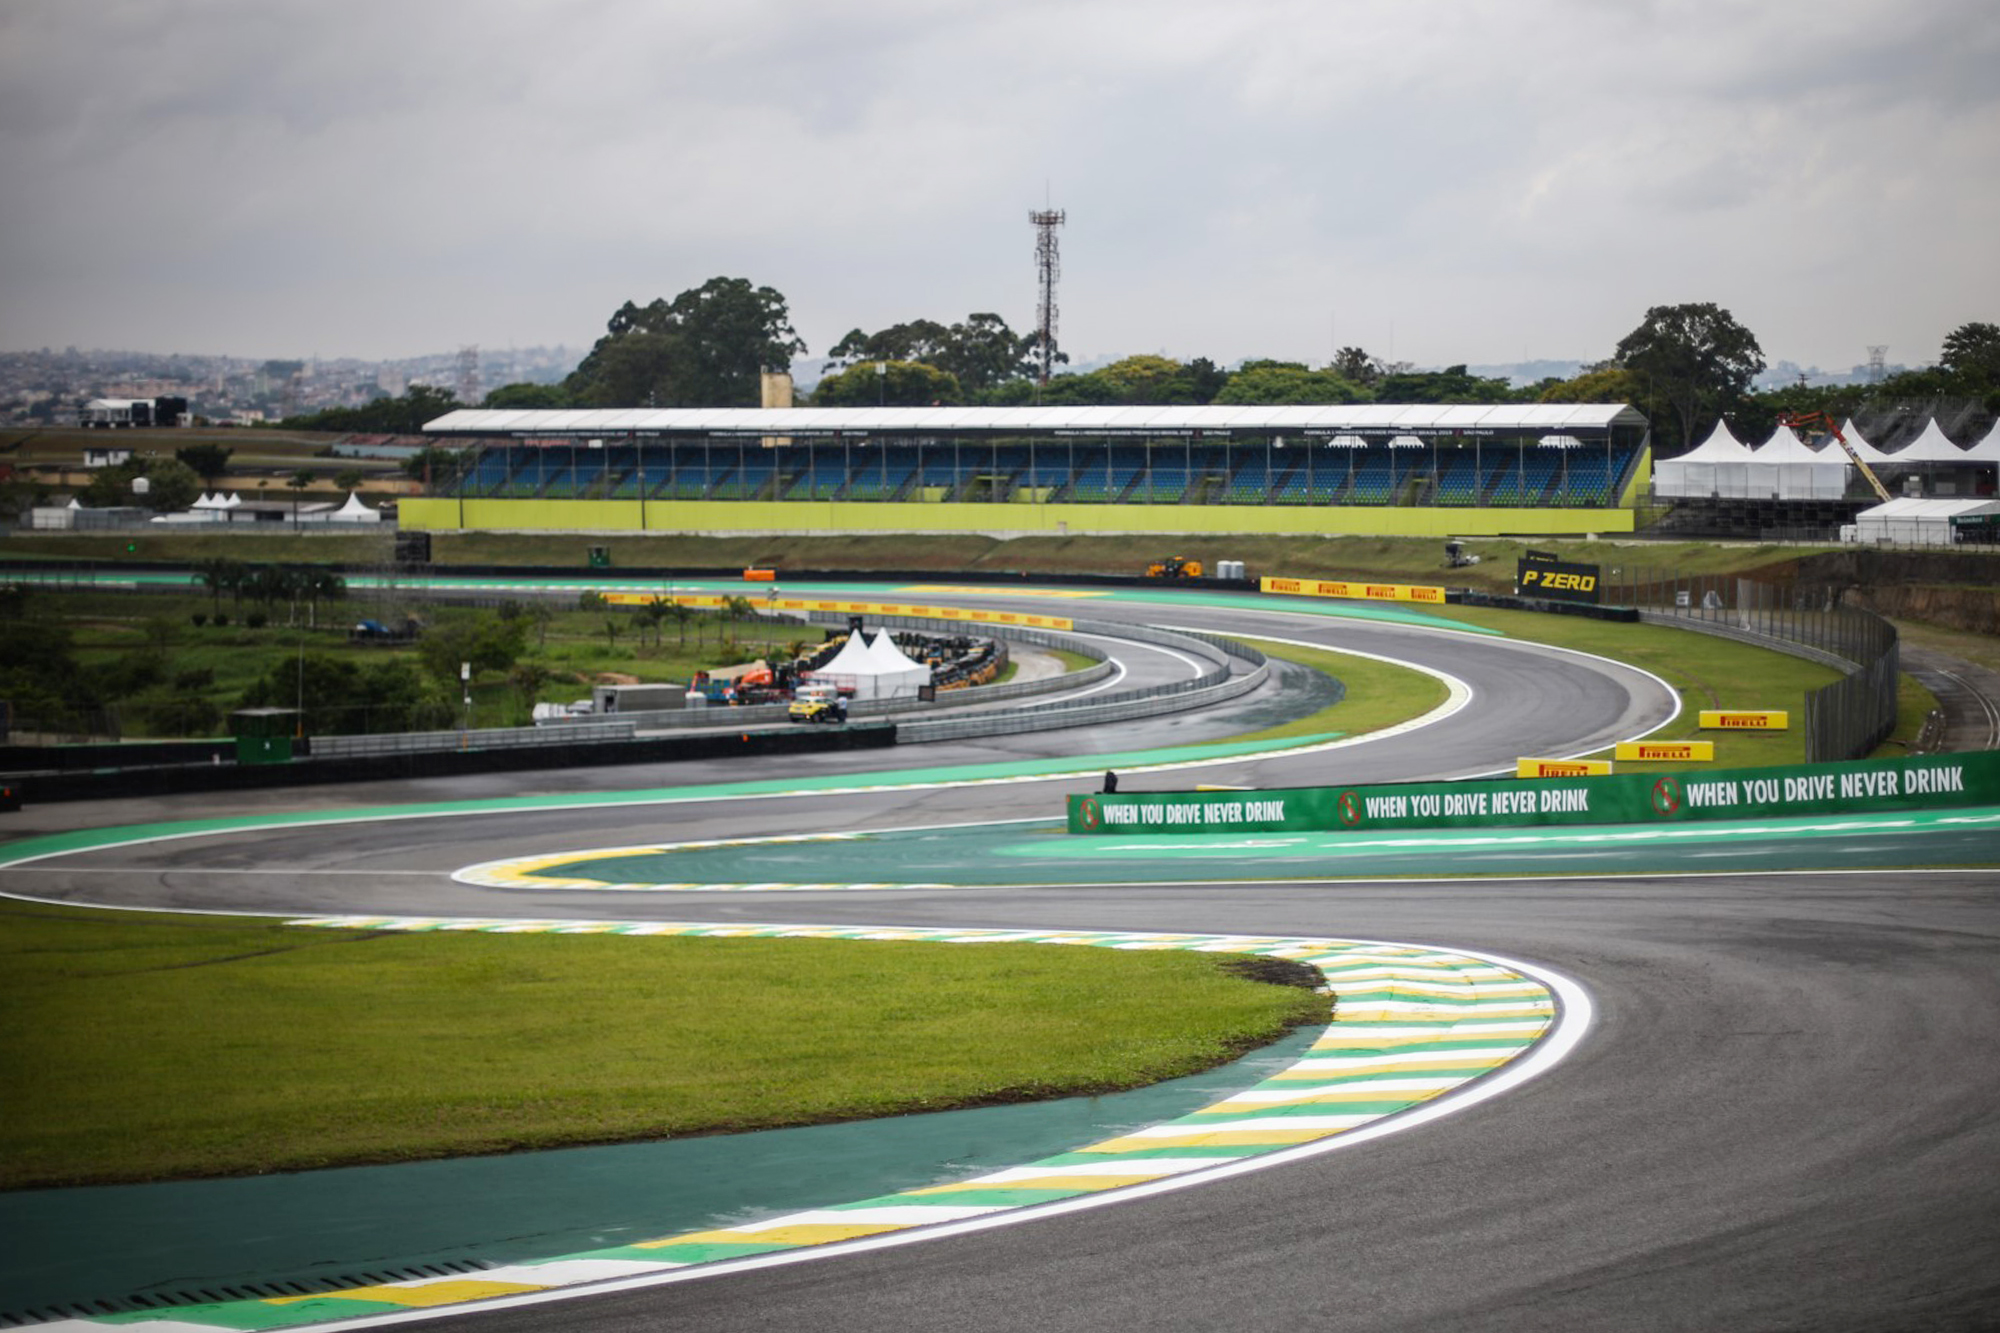 The Senna S at the Interlagos circuit, São Paolo, Brazil